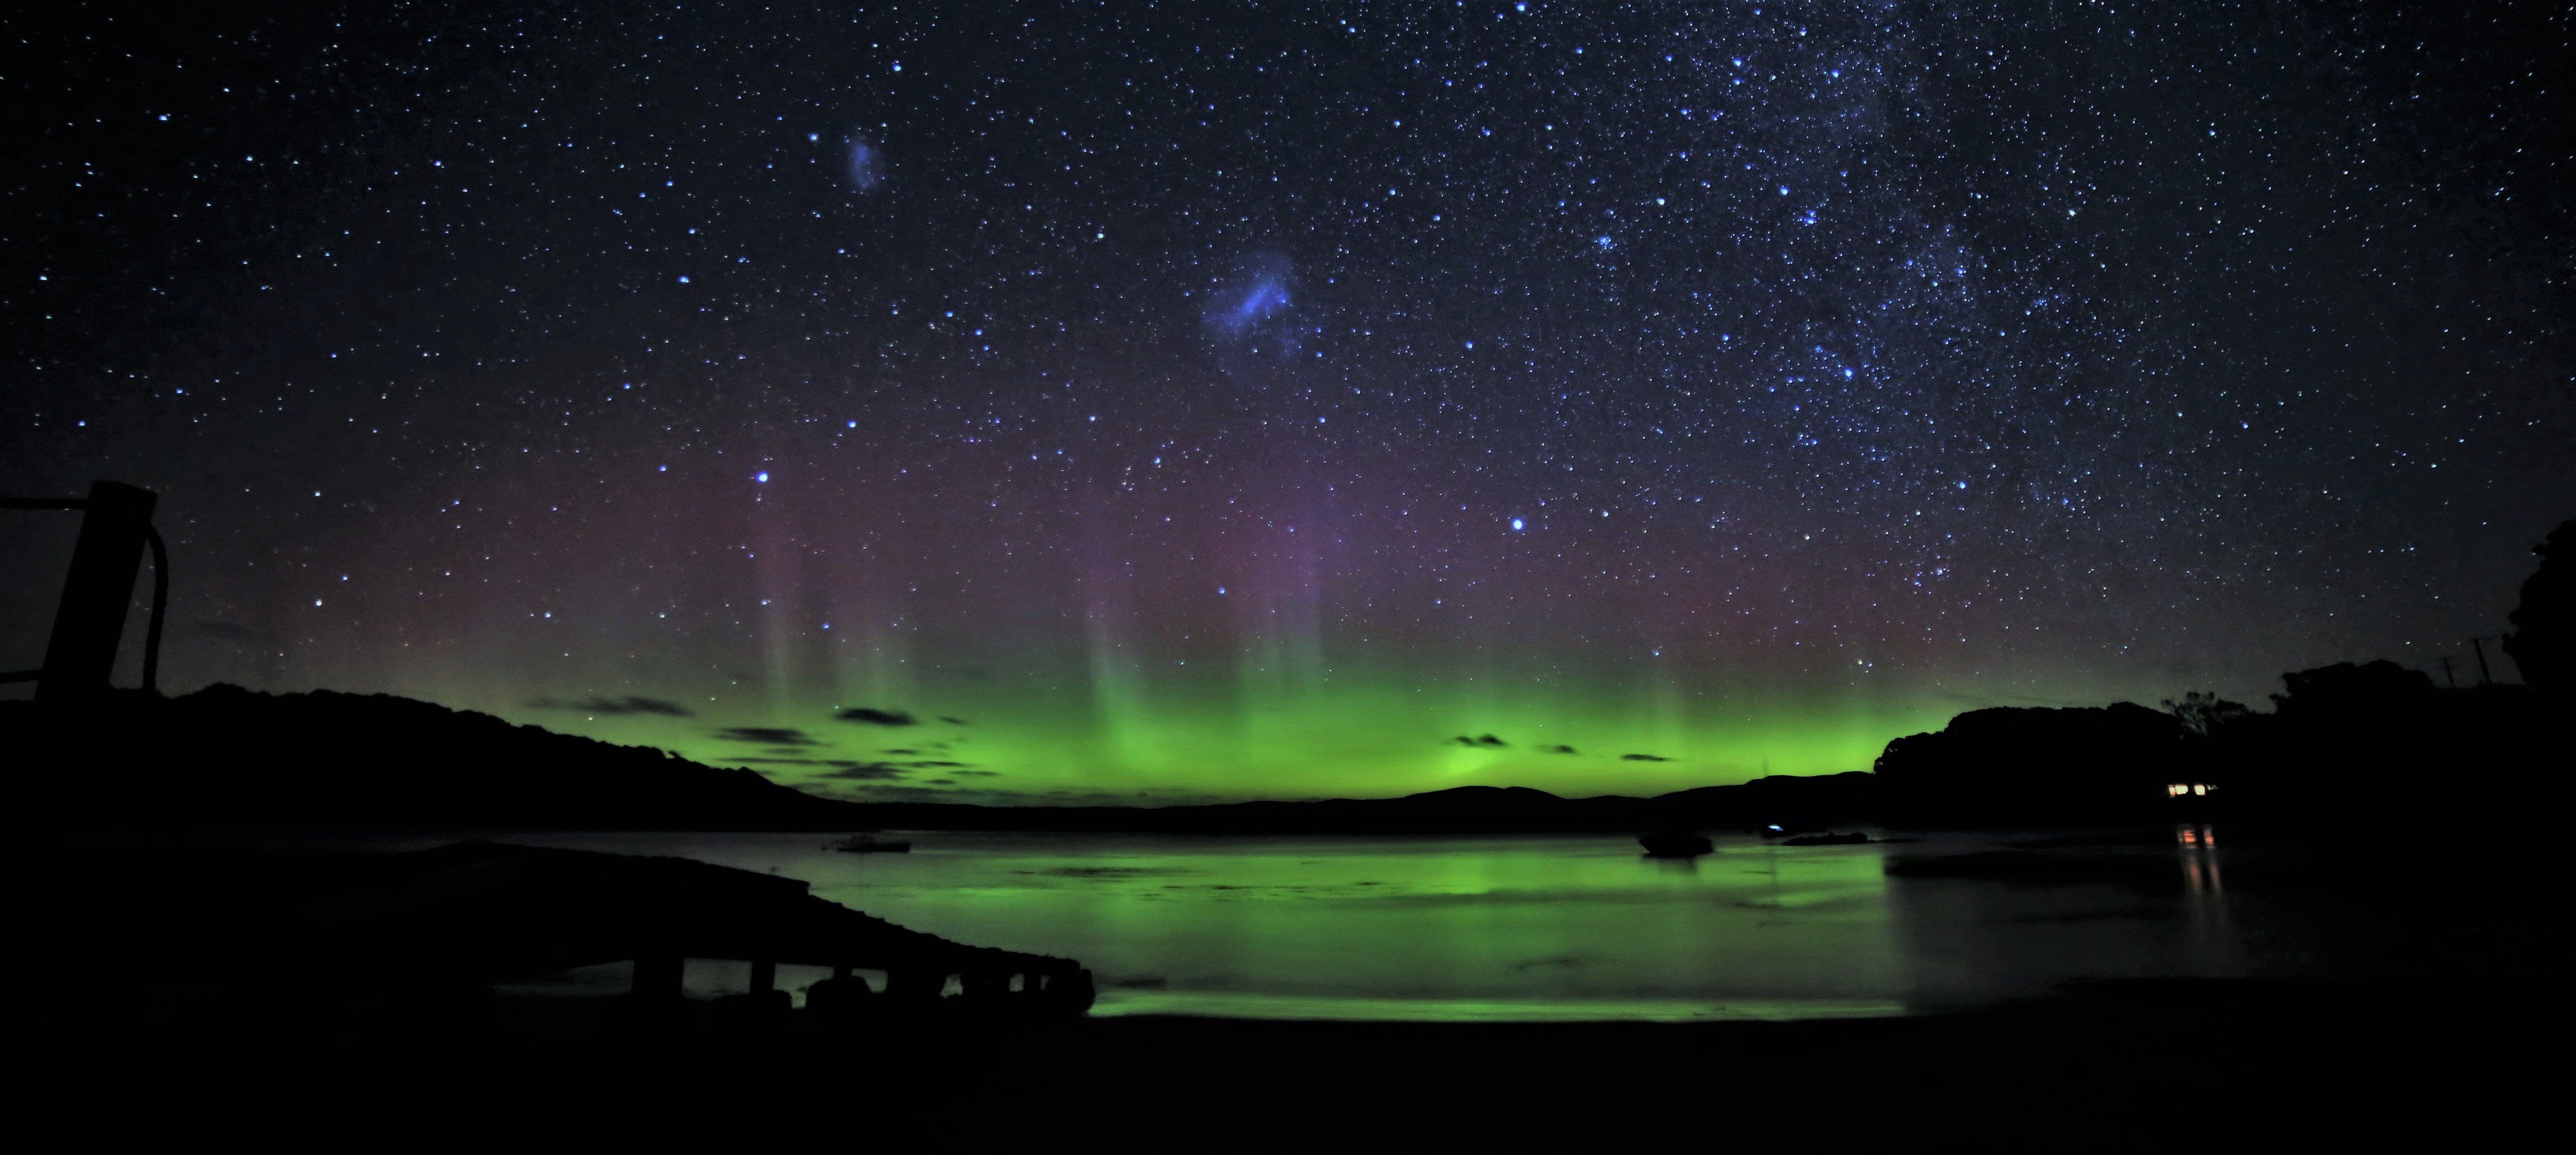 Stewart Island/Rakiura Achieves International Dark Sky Sanctuary Accreditation Image